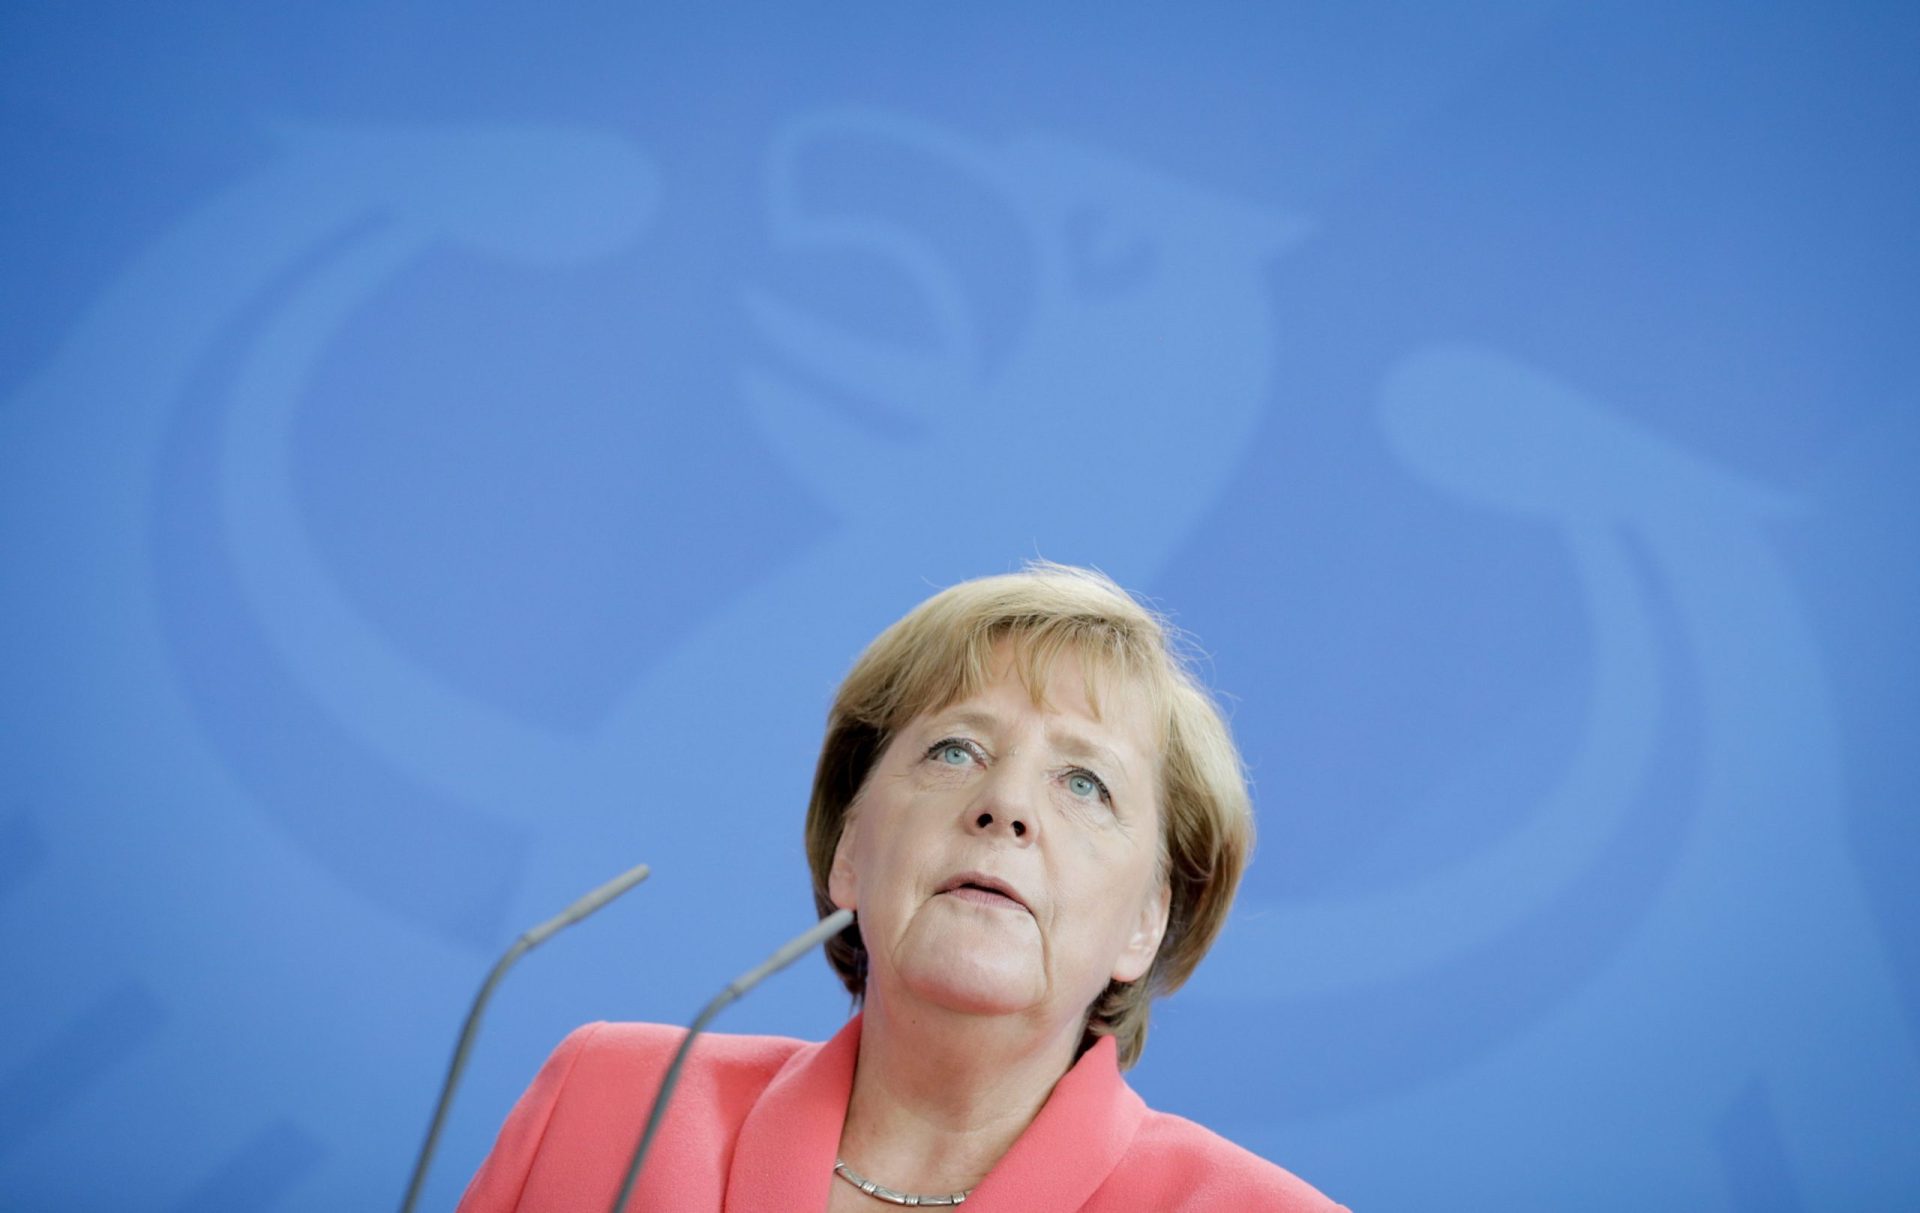 Merkel visita centro de refugiados atacado por neonazis